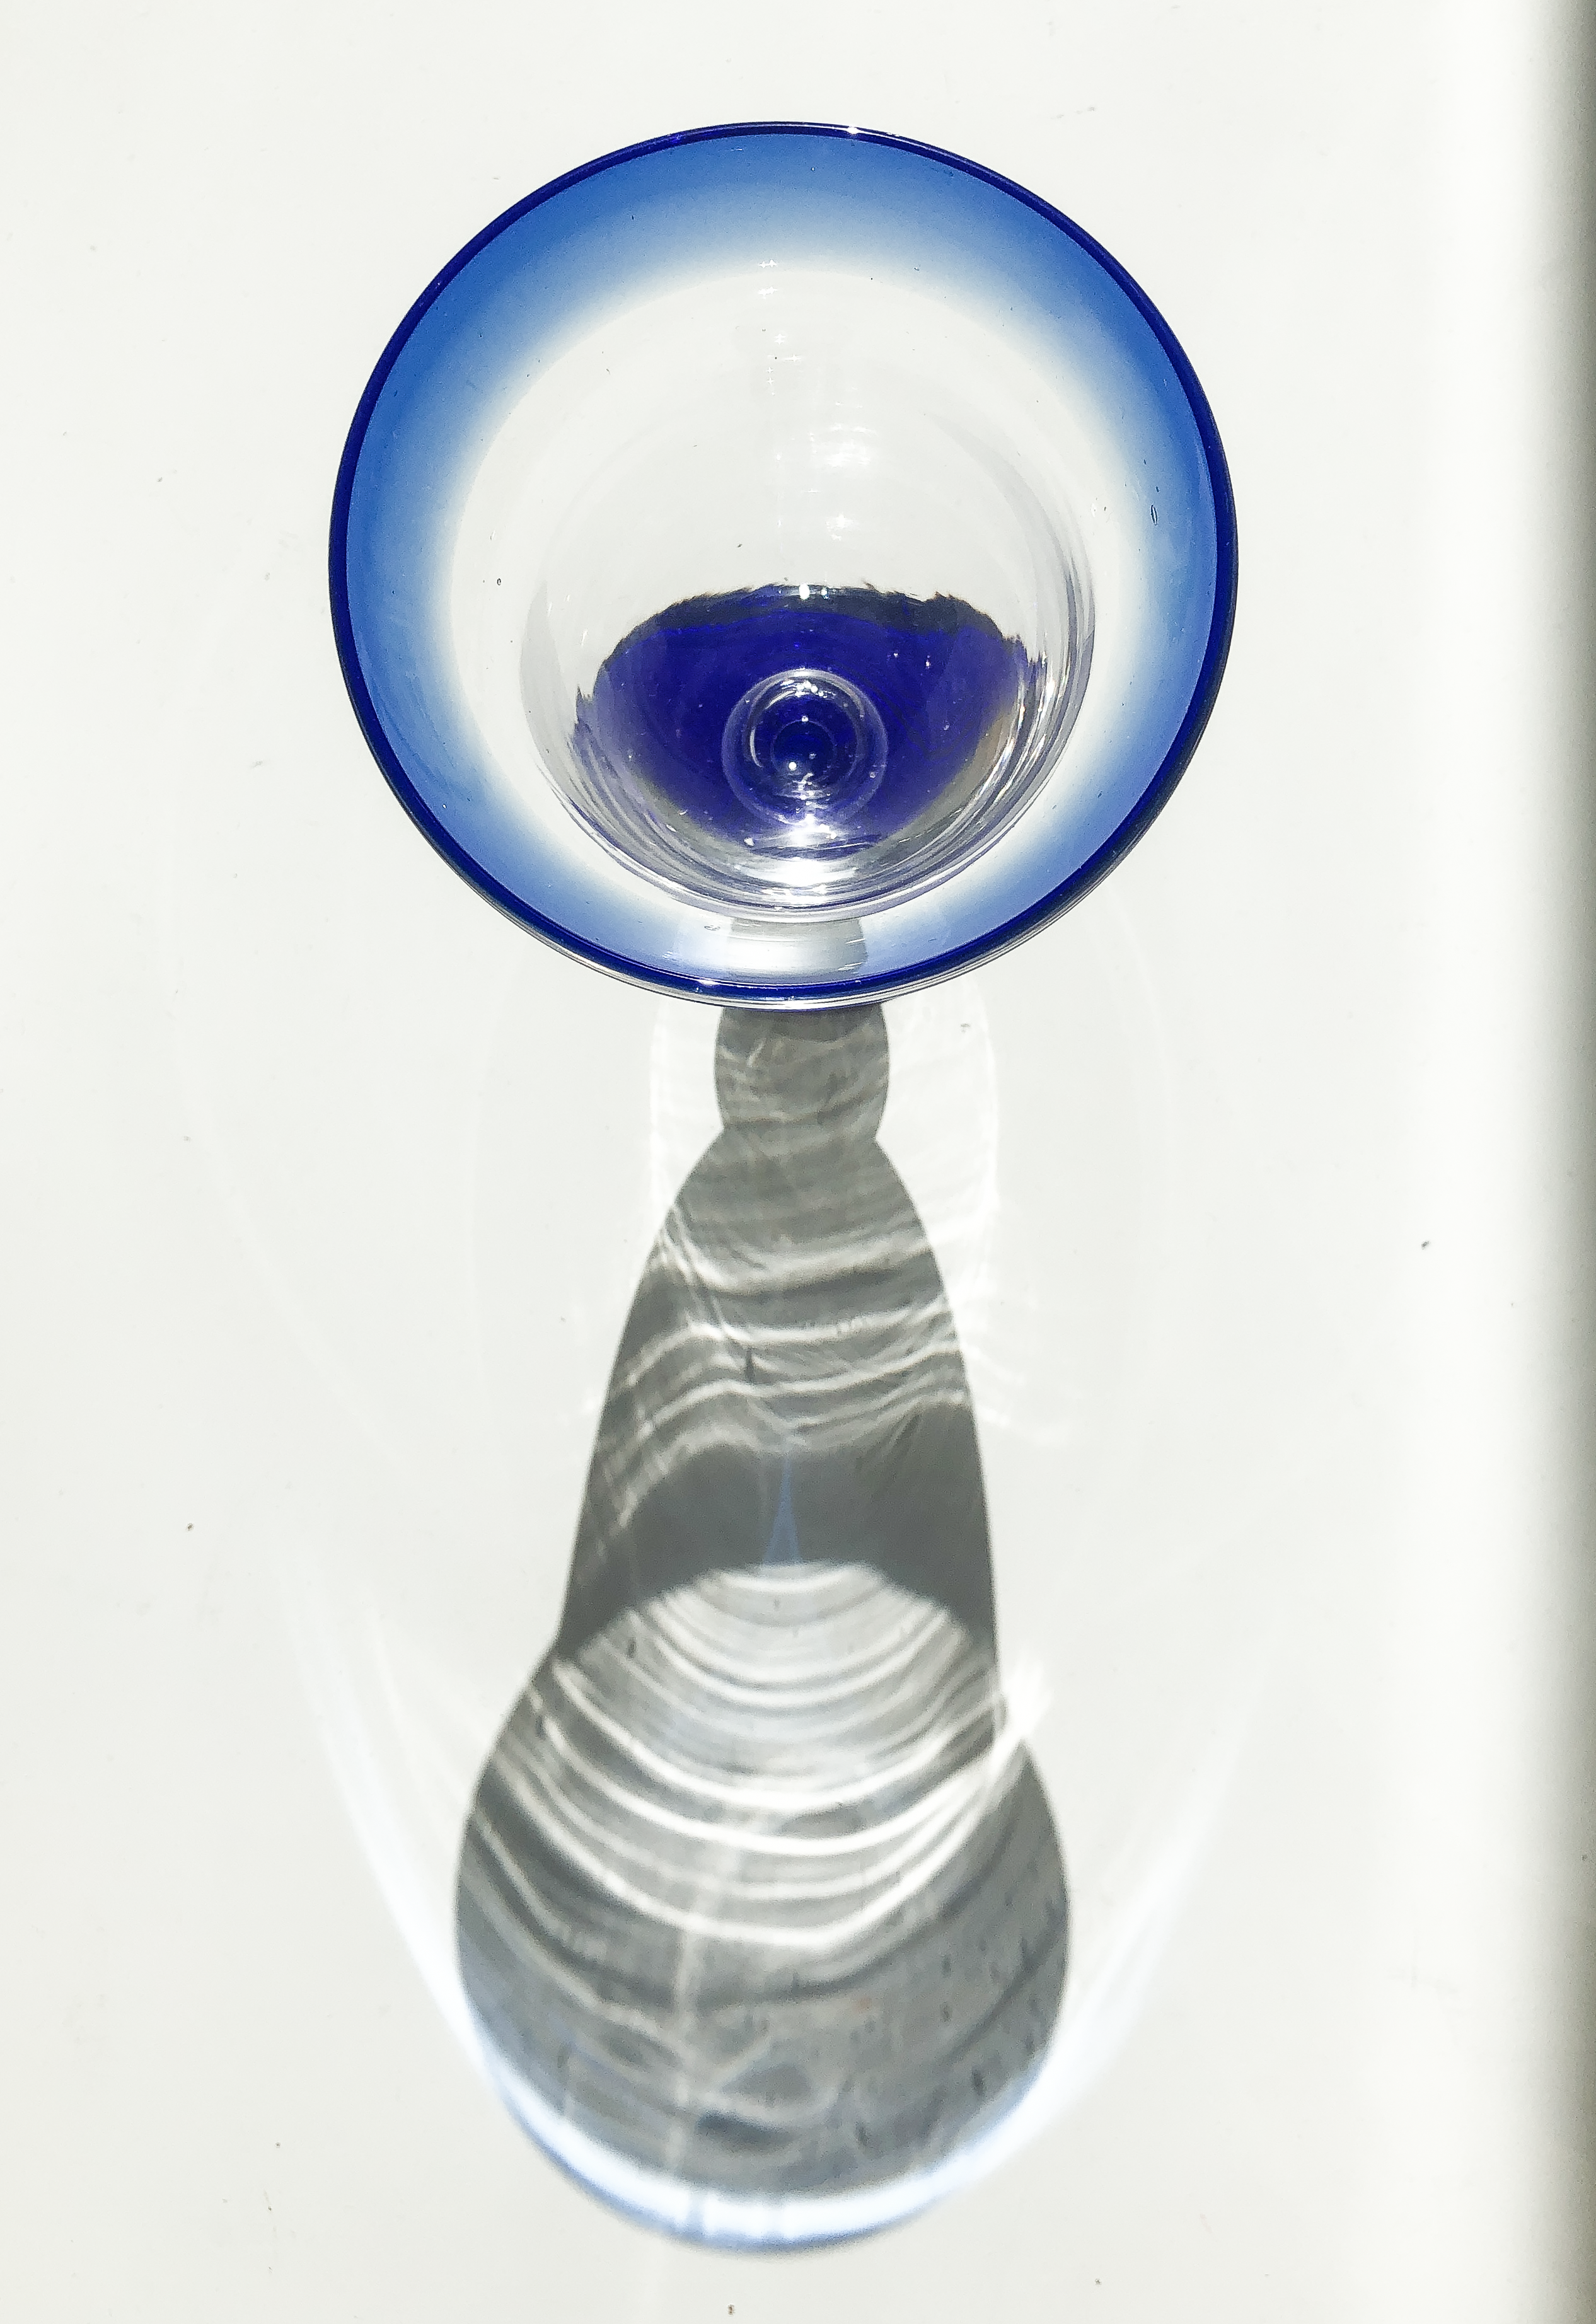 Ultramarine Goblet by PROSE Tabletop